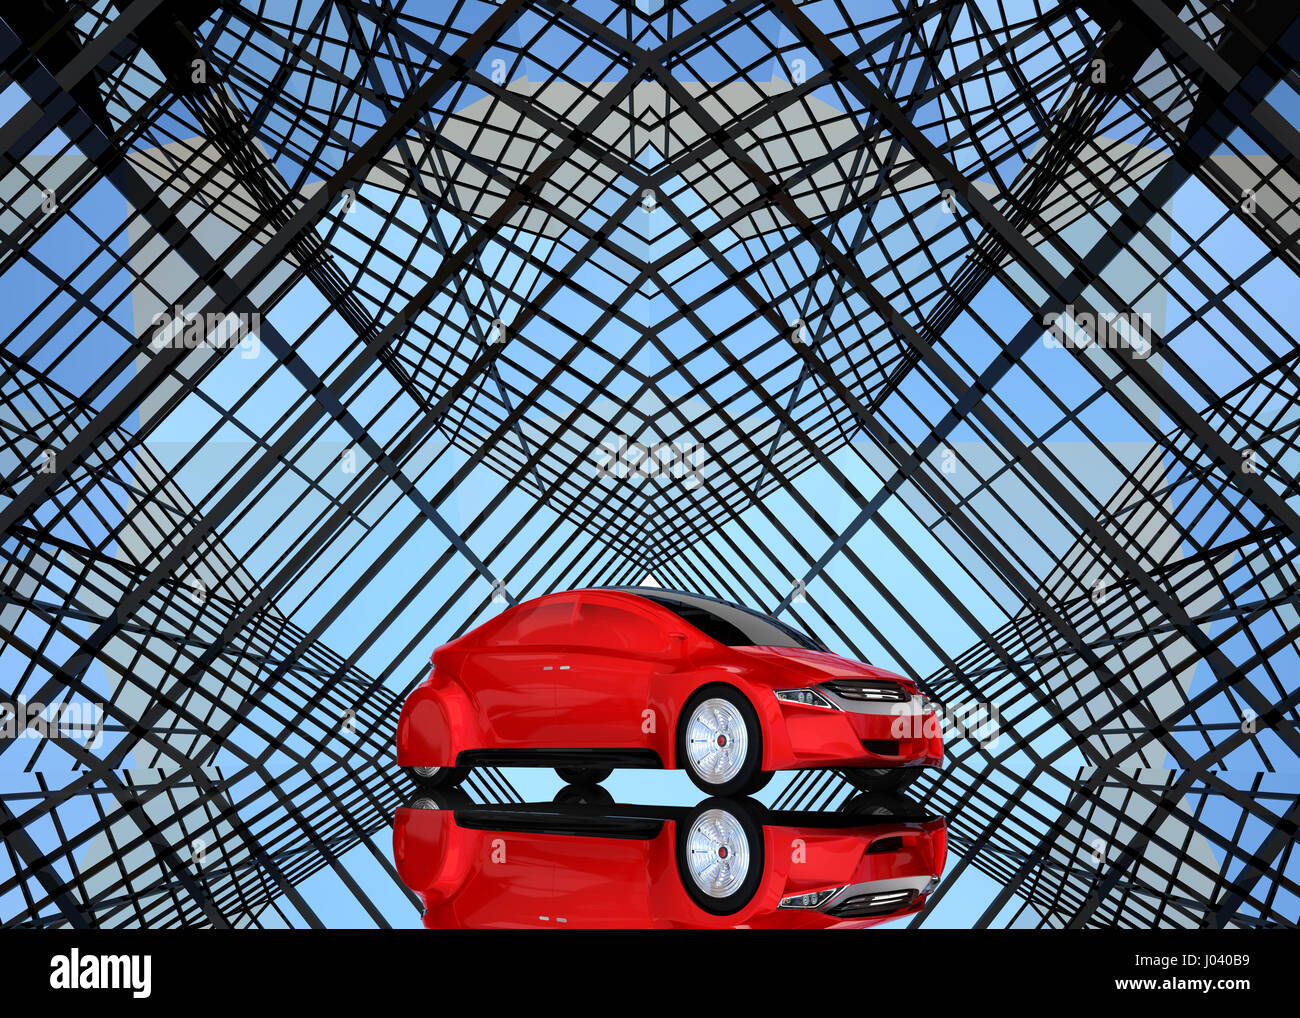 Metallic red color sedan on kaleidoscope style background. 3D rendering image. Stock Photo